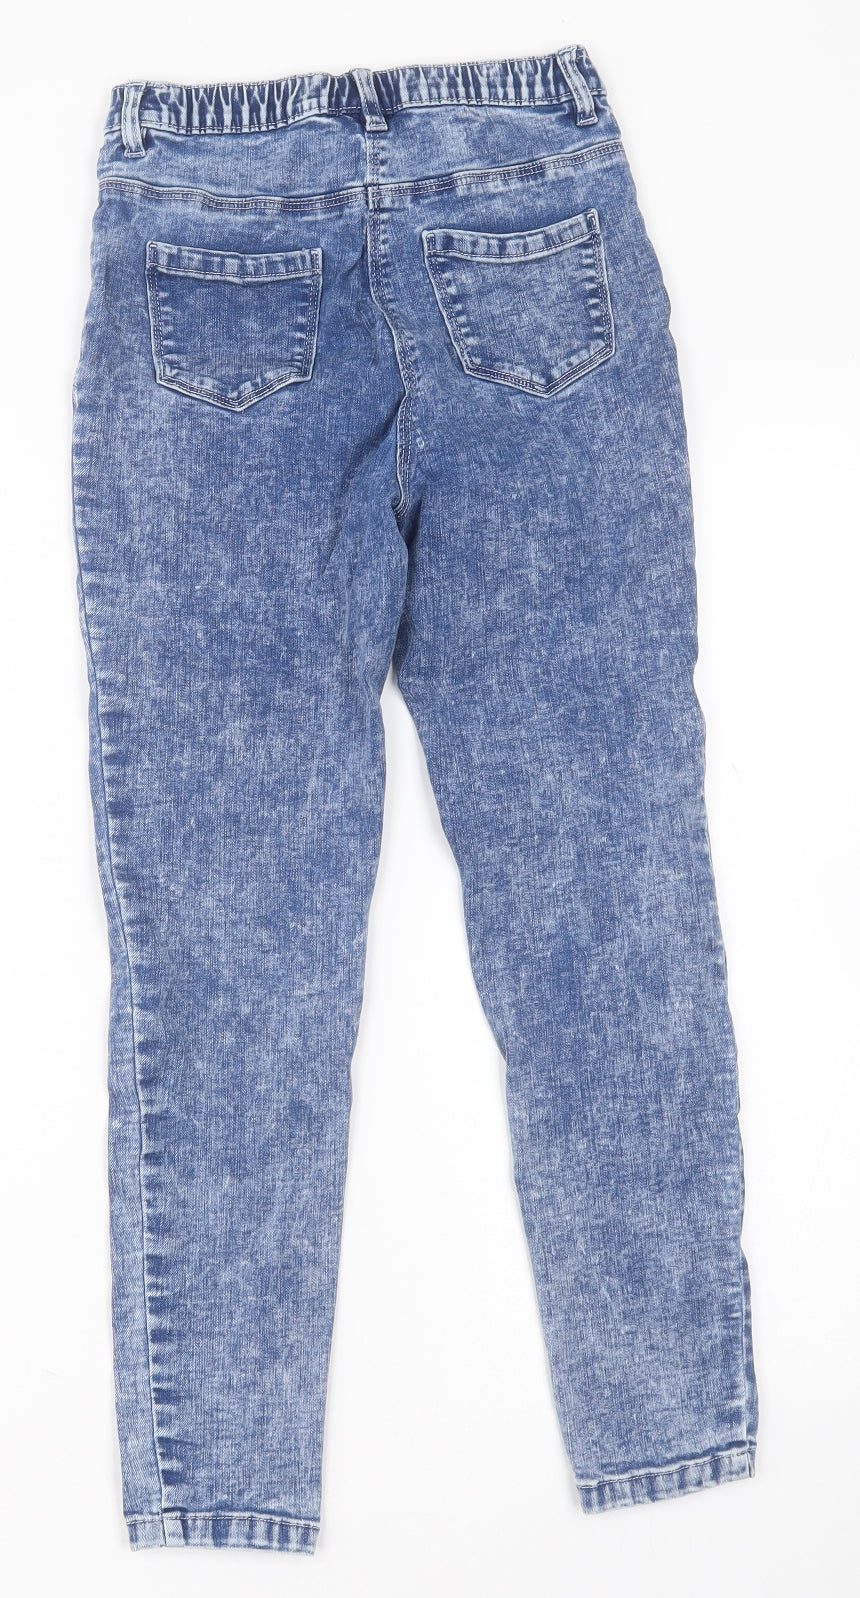 NEXT Girls Blue  Cotton Straight Jeans Size 11 Years  Regular Button